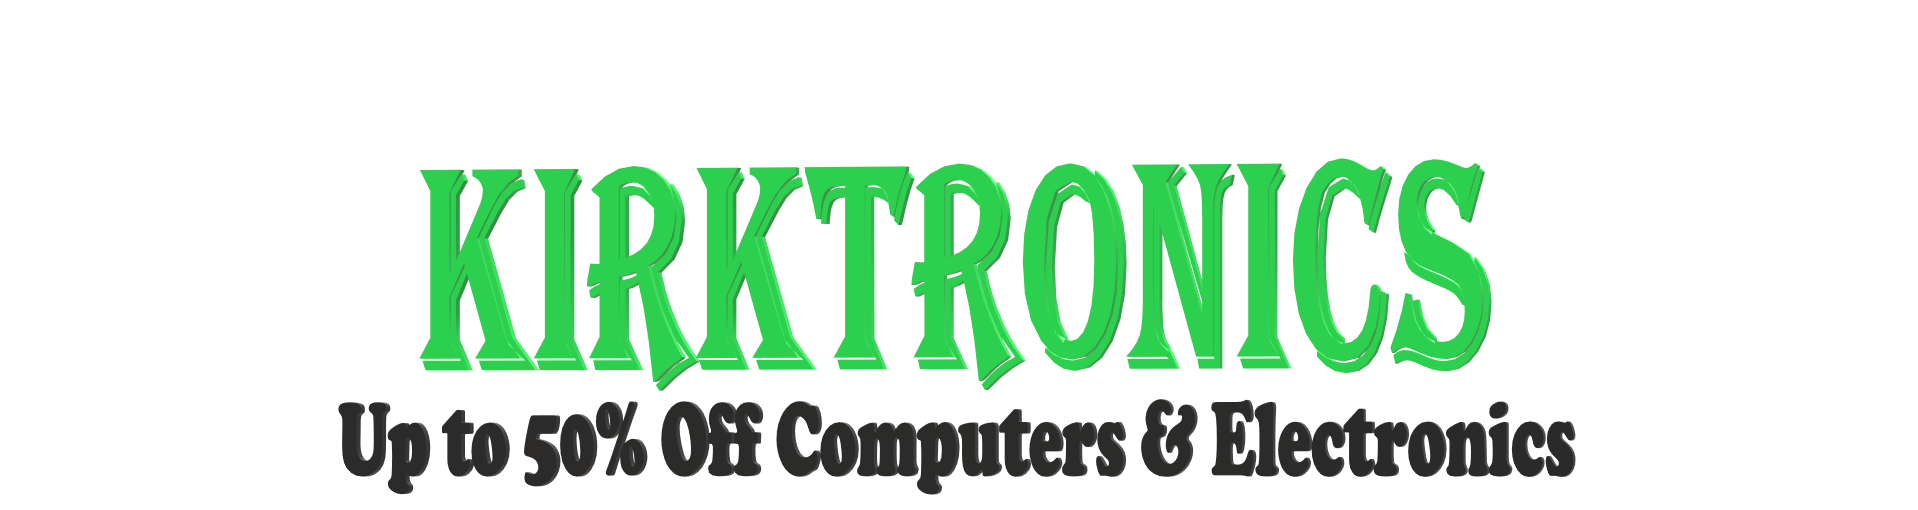 kirktronics.com banner